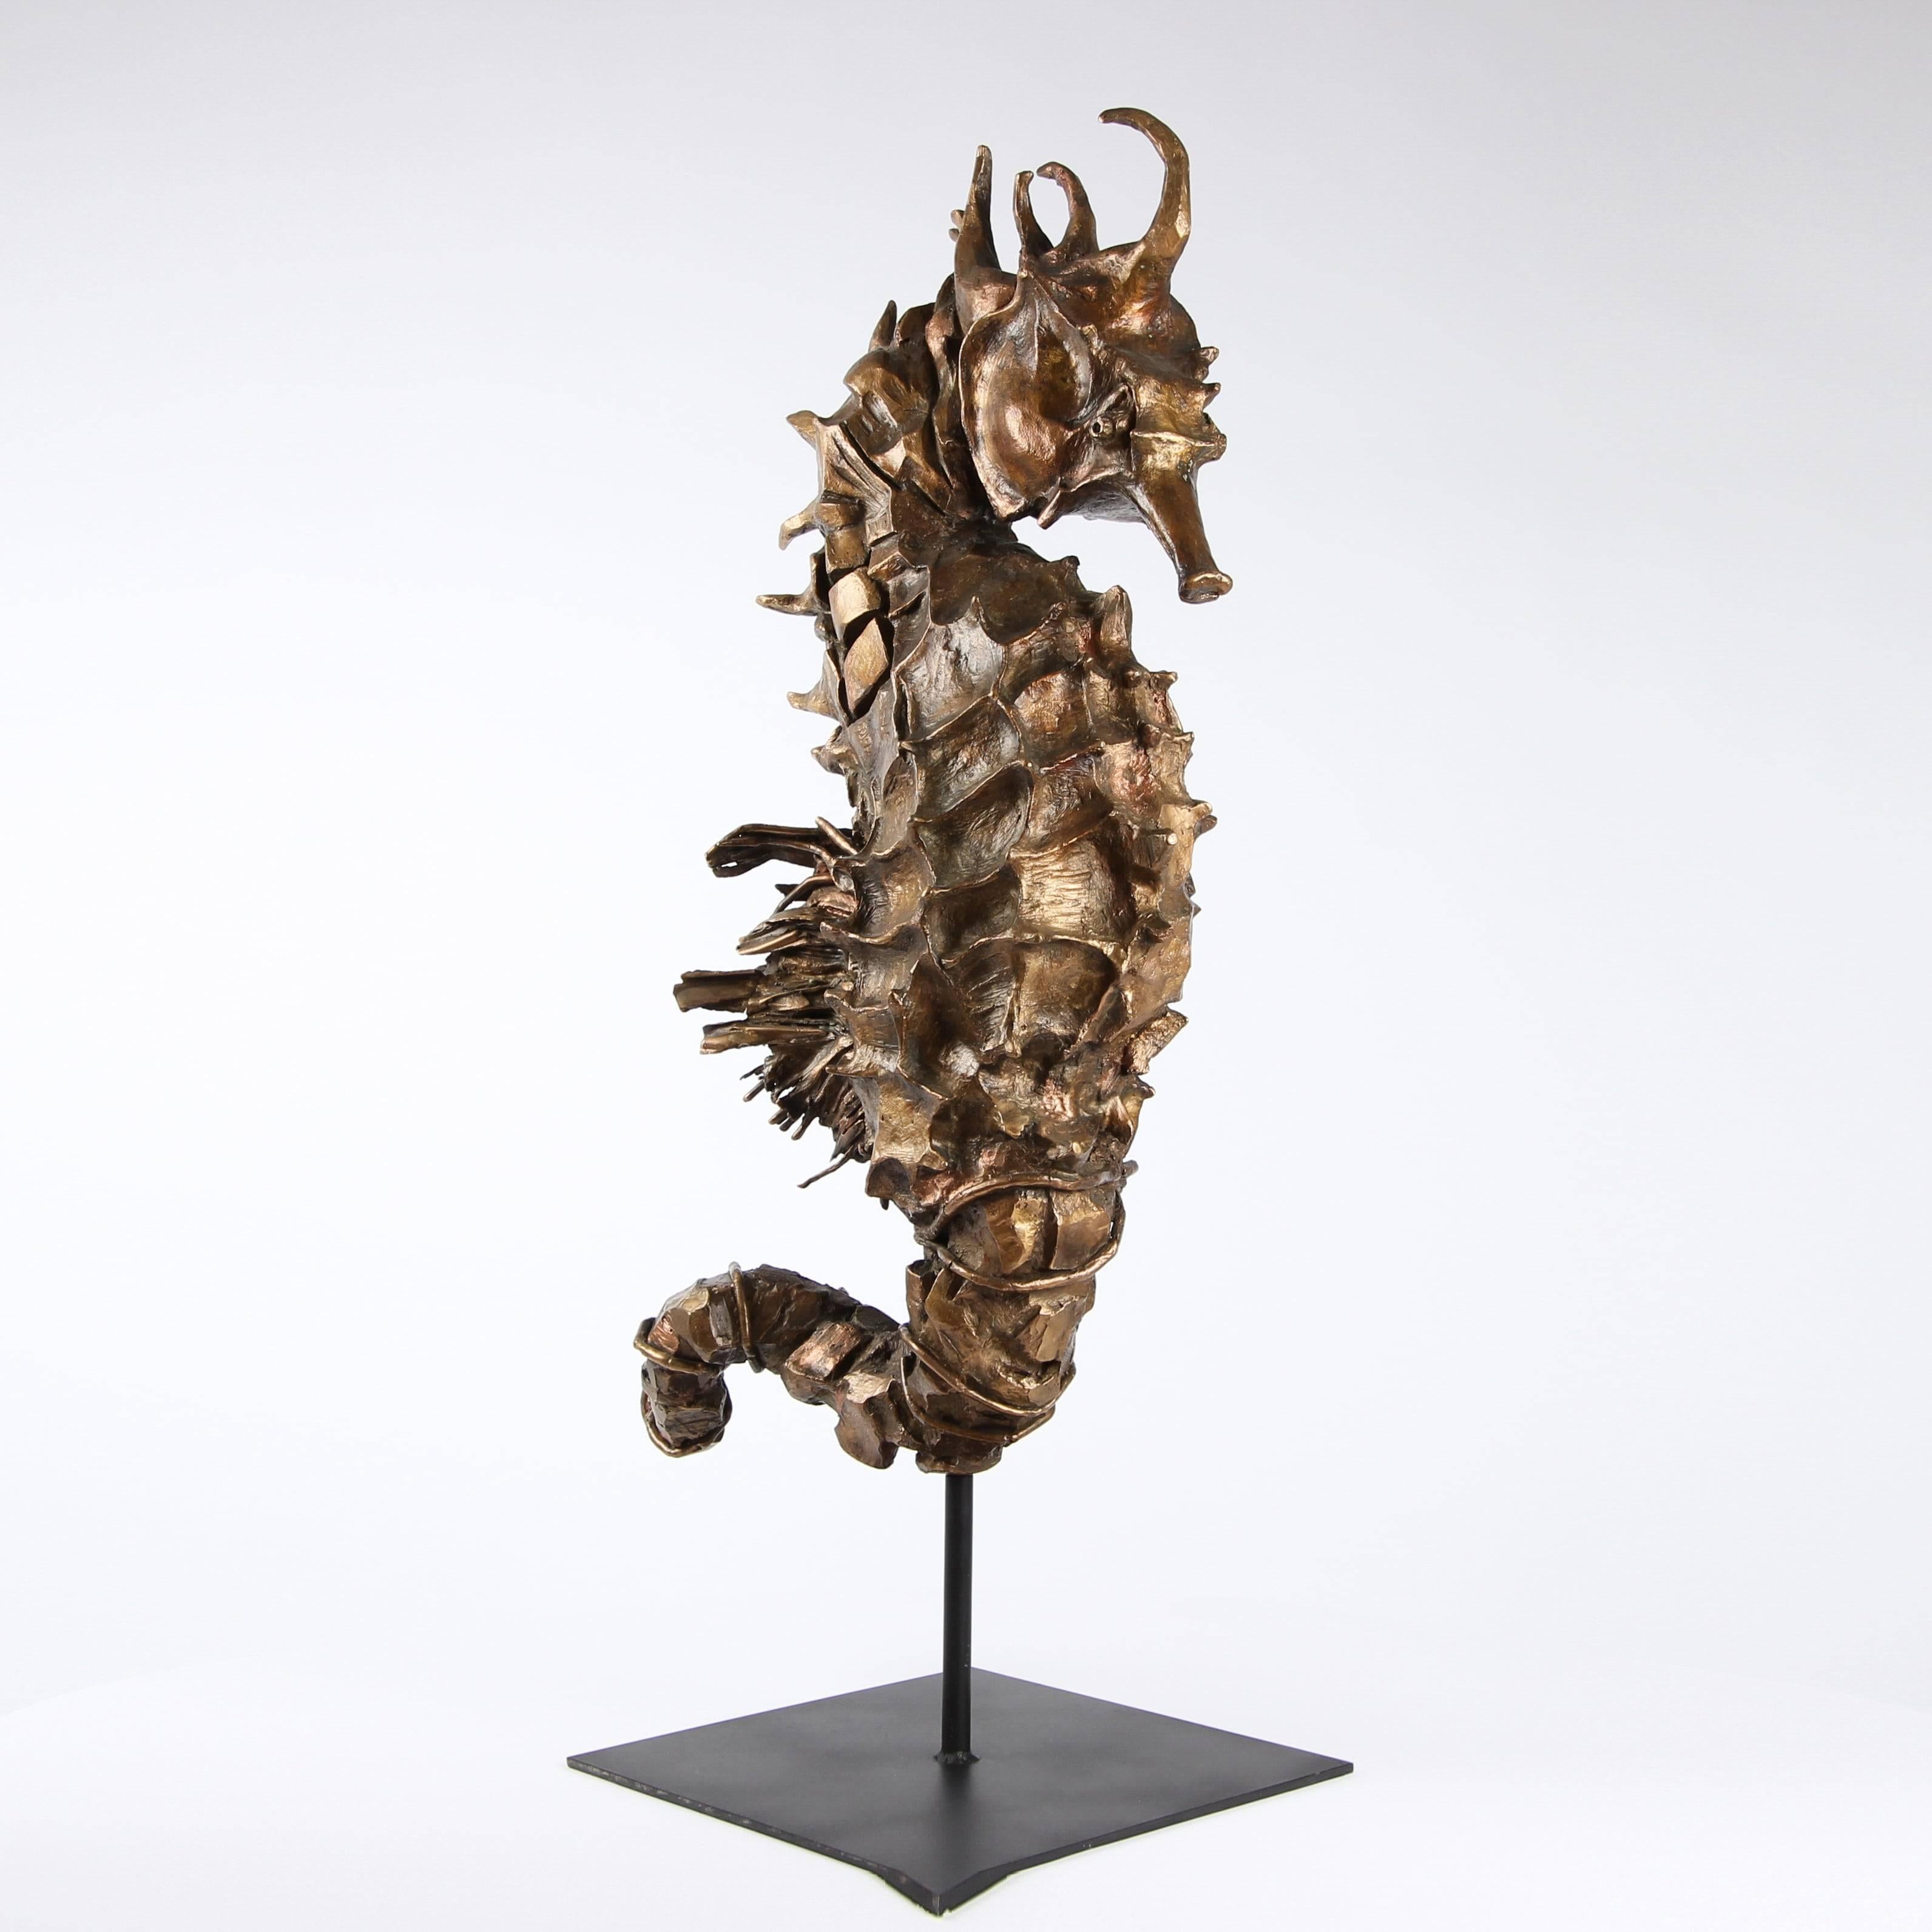 Seahorse Rex Gold by Chésade - Sealife bronze sculpture For Sale 1